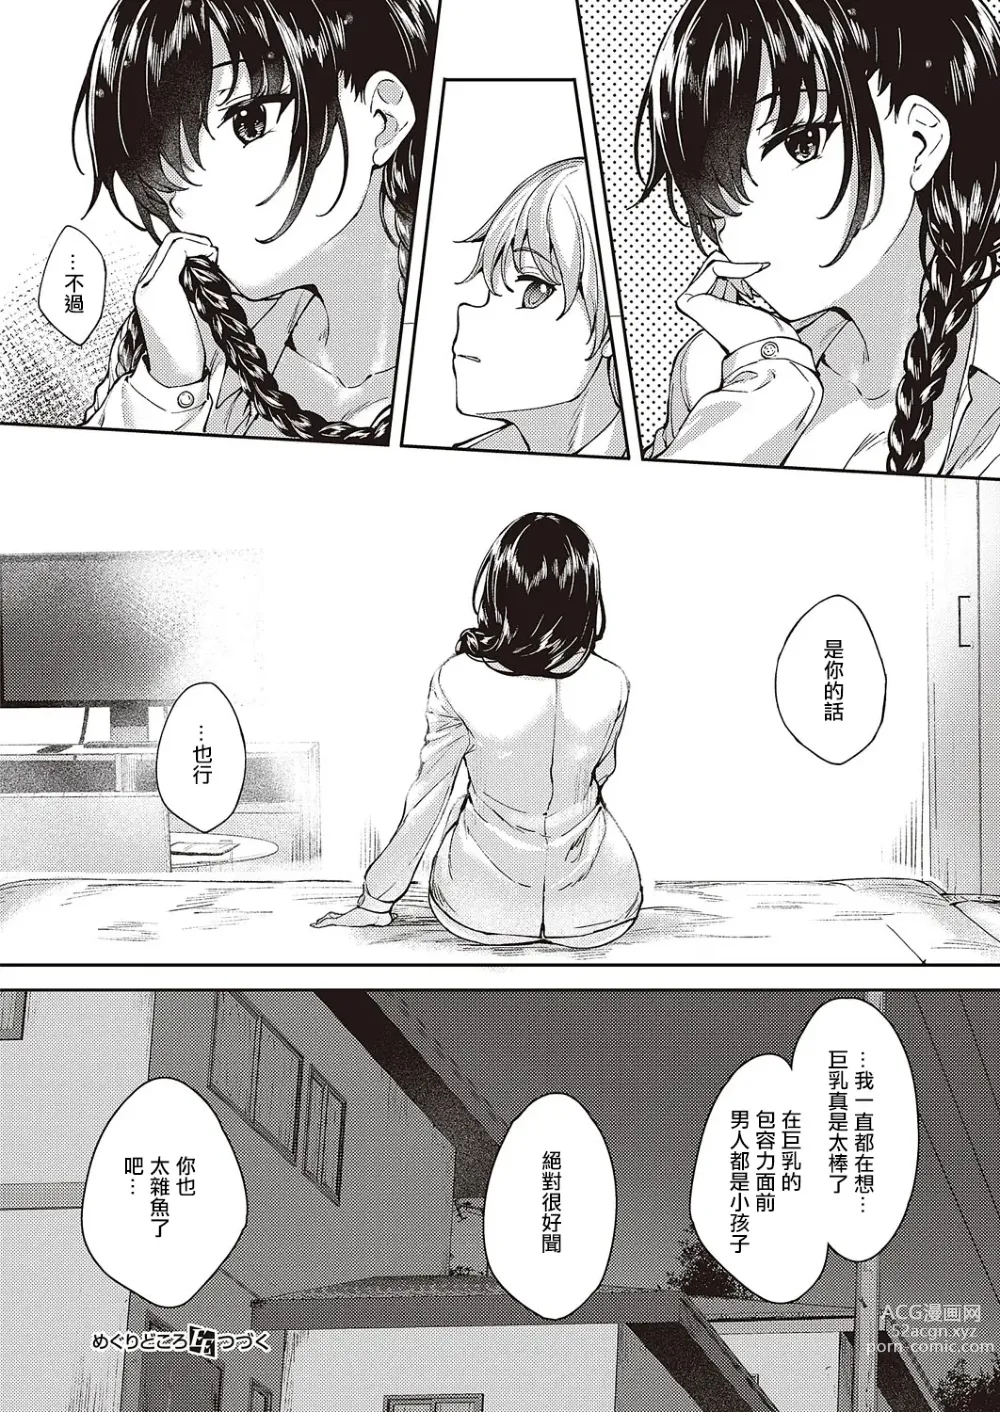 Page 28 of manga めぐりどころ 1歩